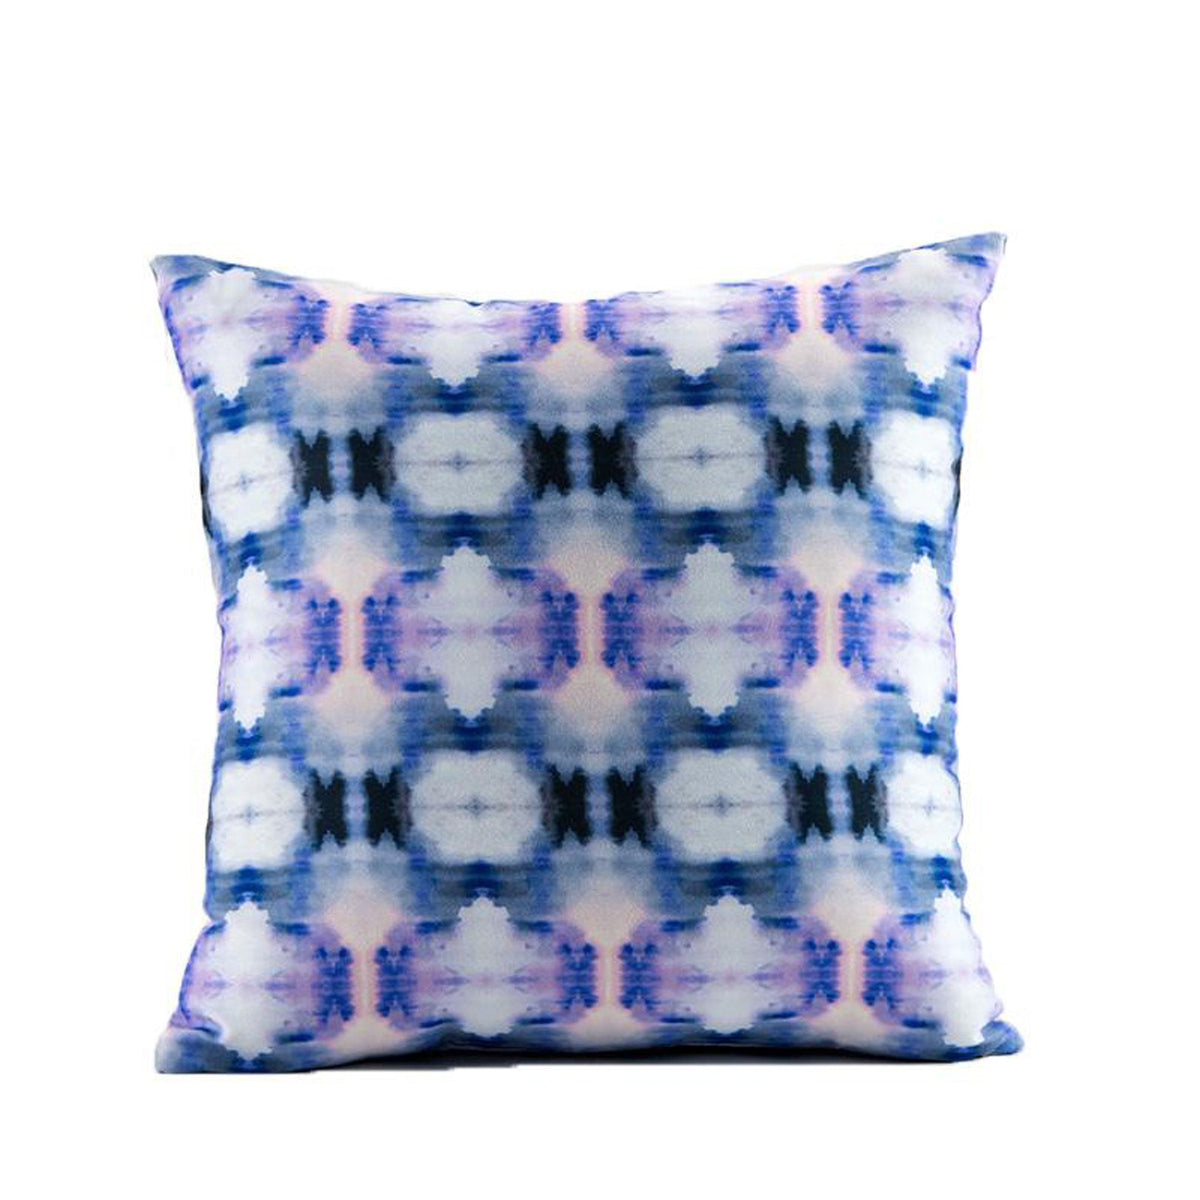 Throw Pillow - Akira Lavender Bedding Collections, Pillows, Throw Pillows MWW 